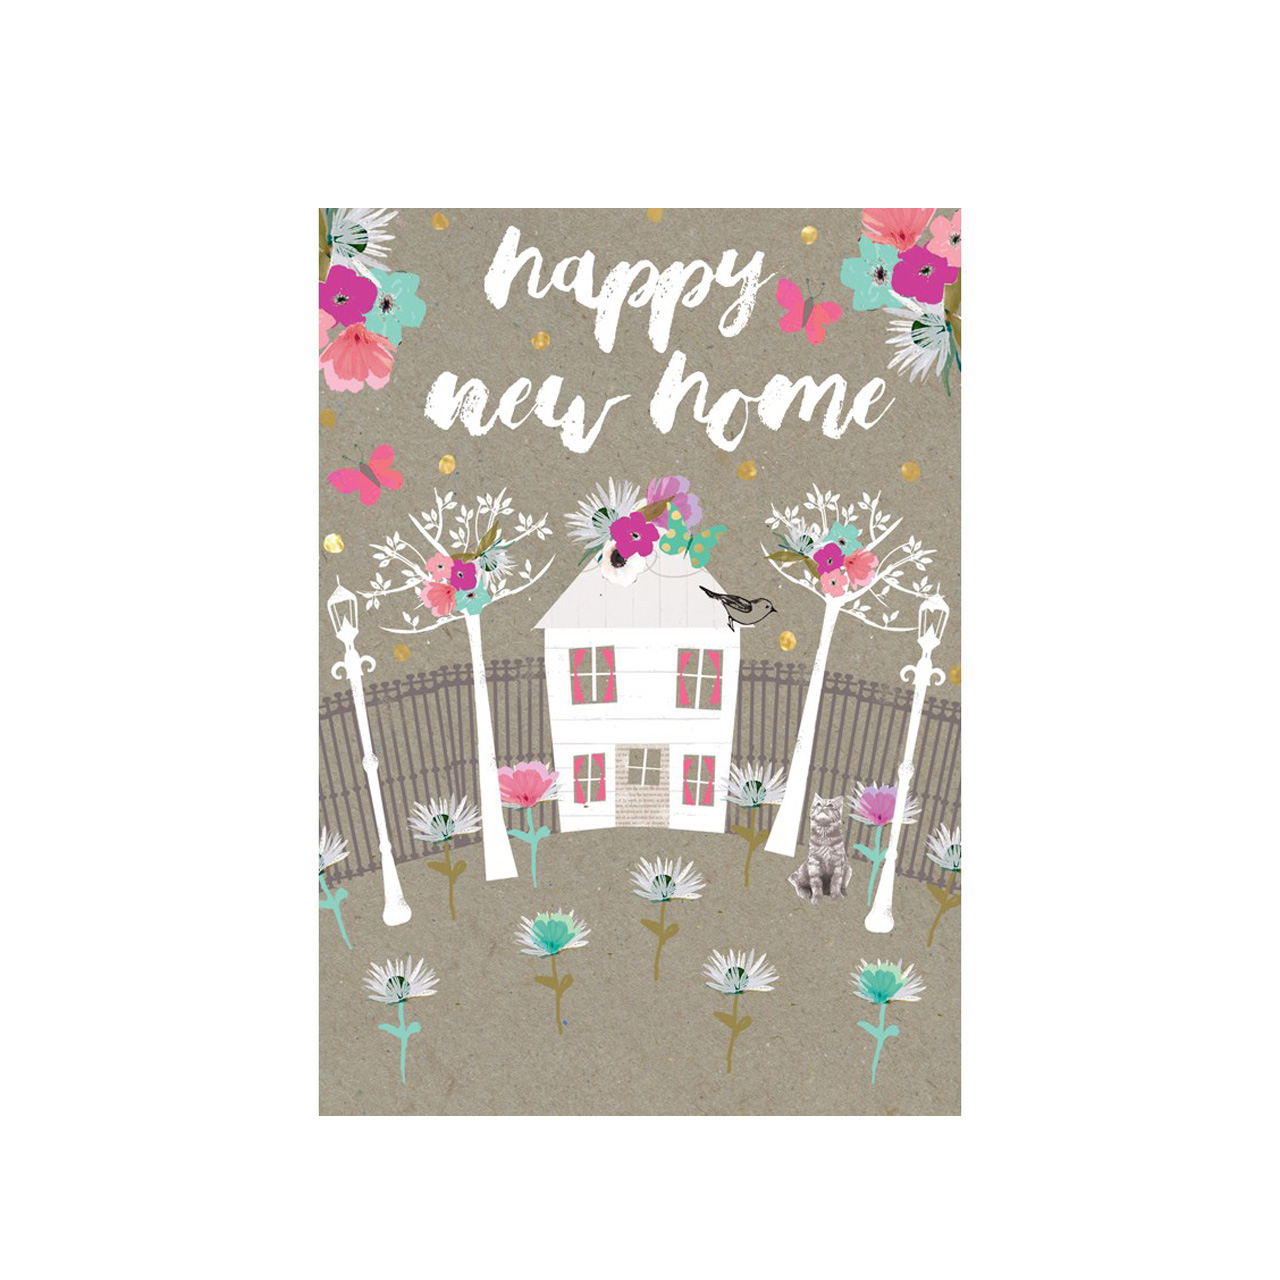 Happy new home (Postkarten)